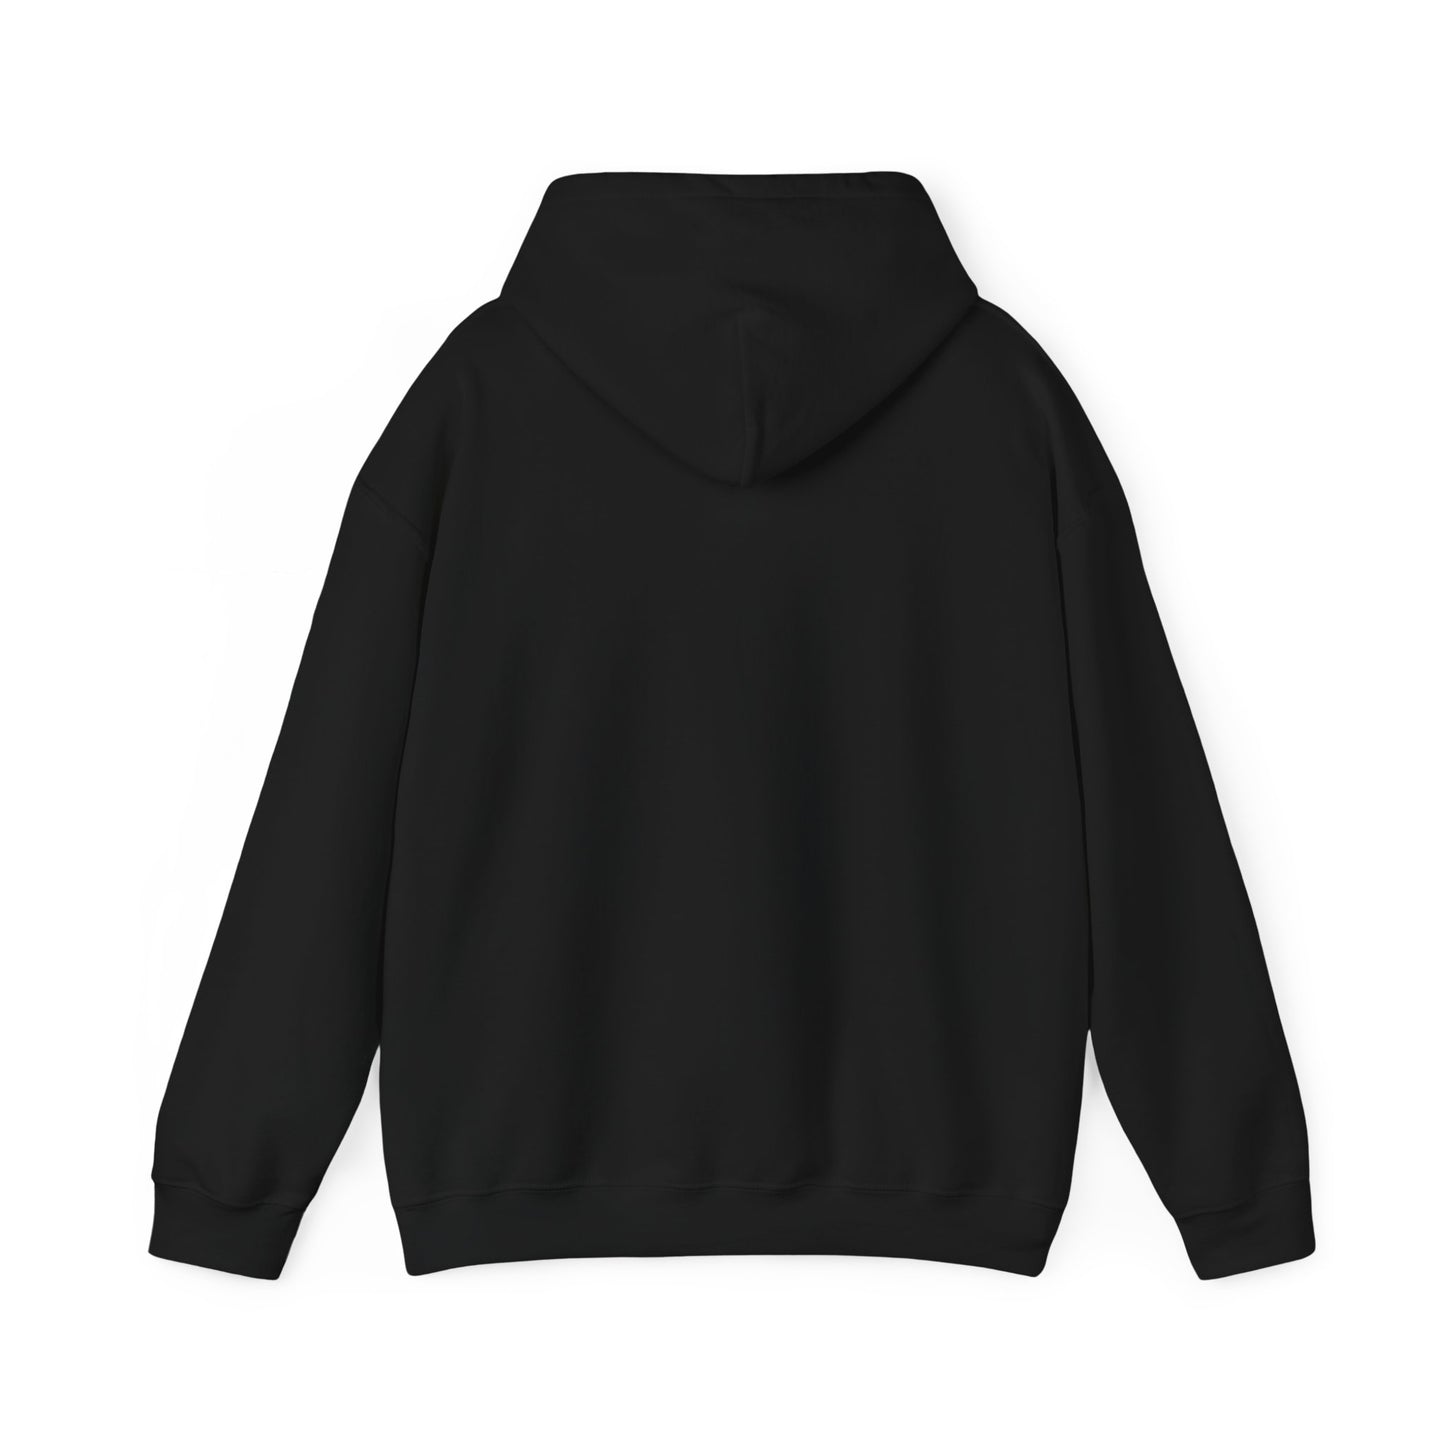 Mauna Loa Unisex Heavy Blend™ Hooded Sweatshirt